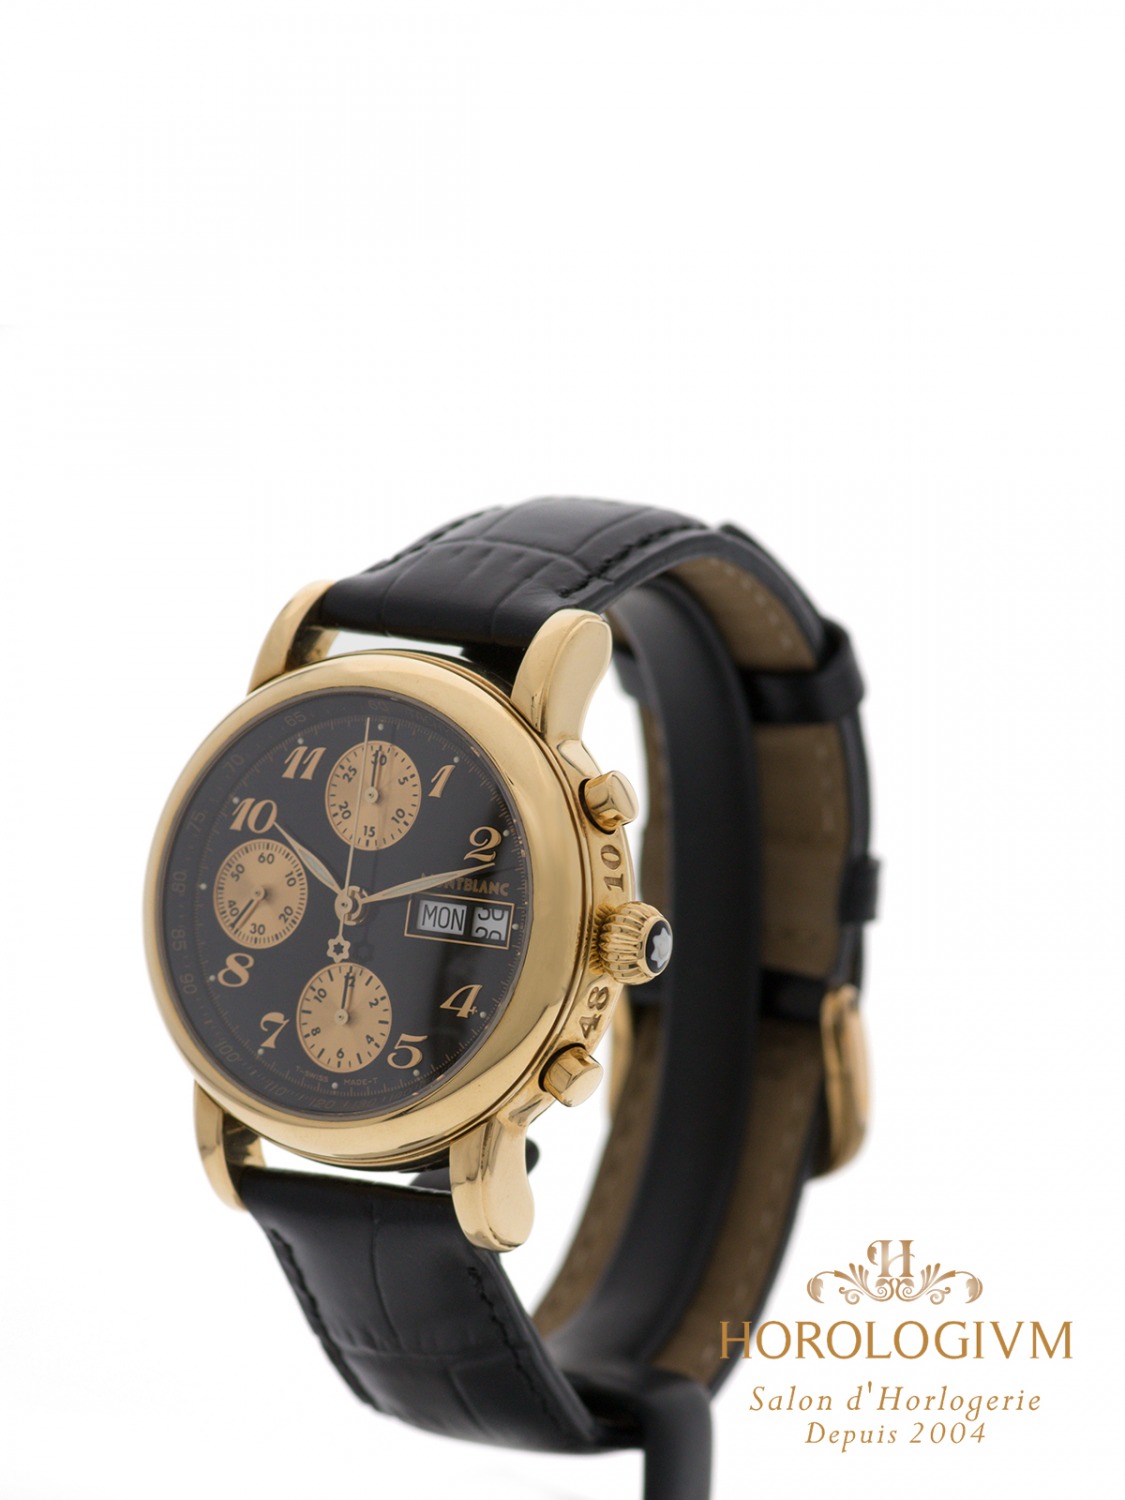 Montblanc Star Meisterstuck Automatic Chrono DayDate Ref. 7000 watch, yellow gold